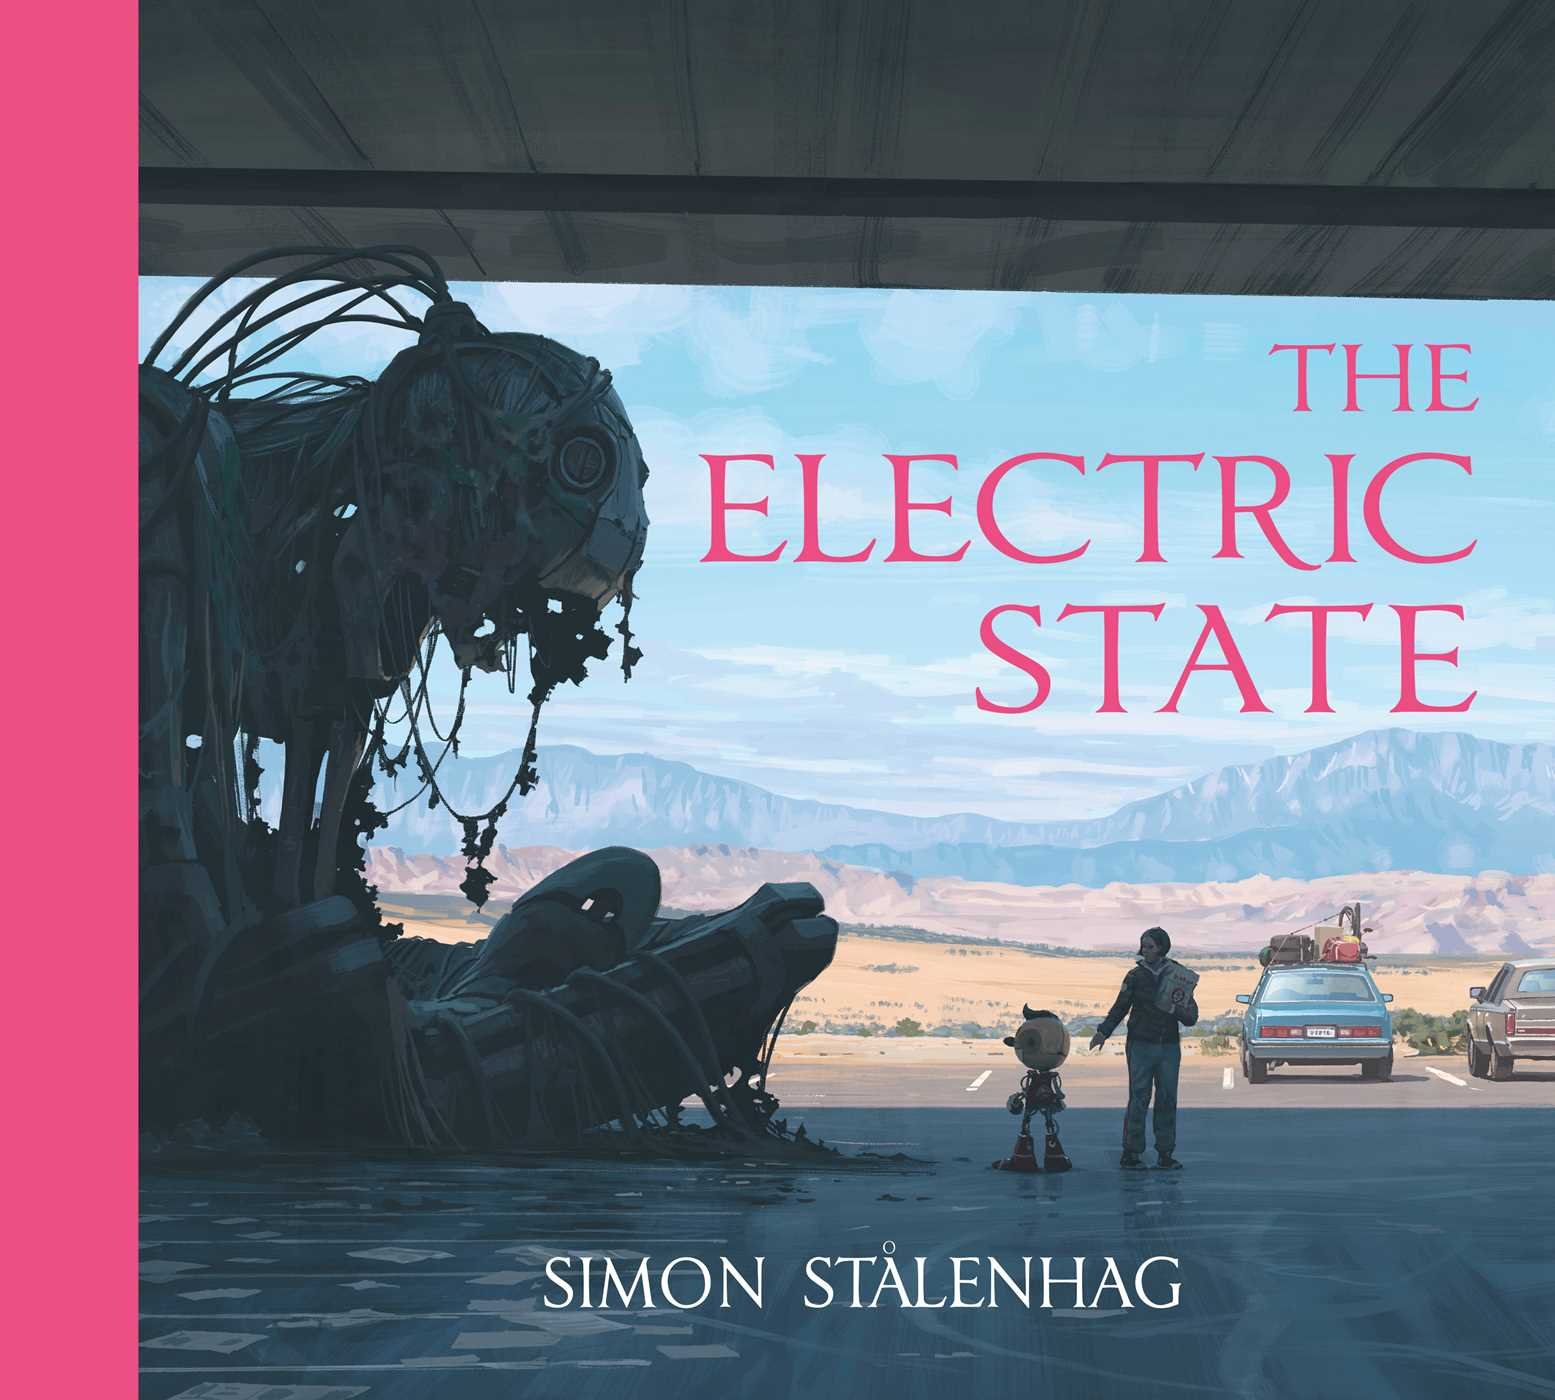 Simon Stålenhag: The electric state (2018)